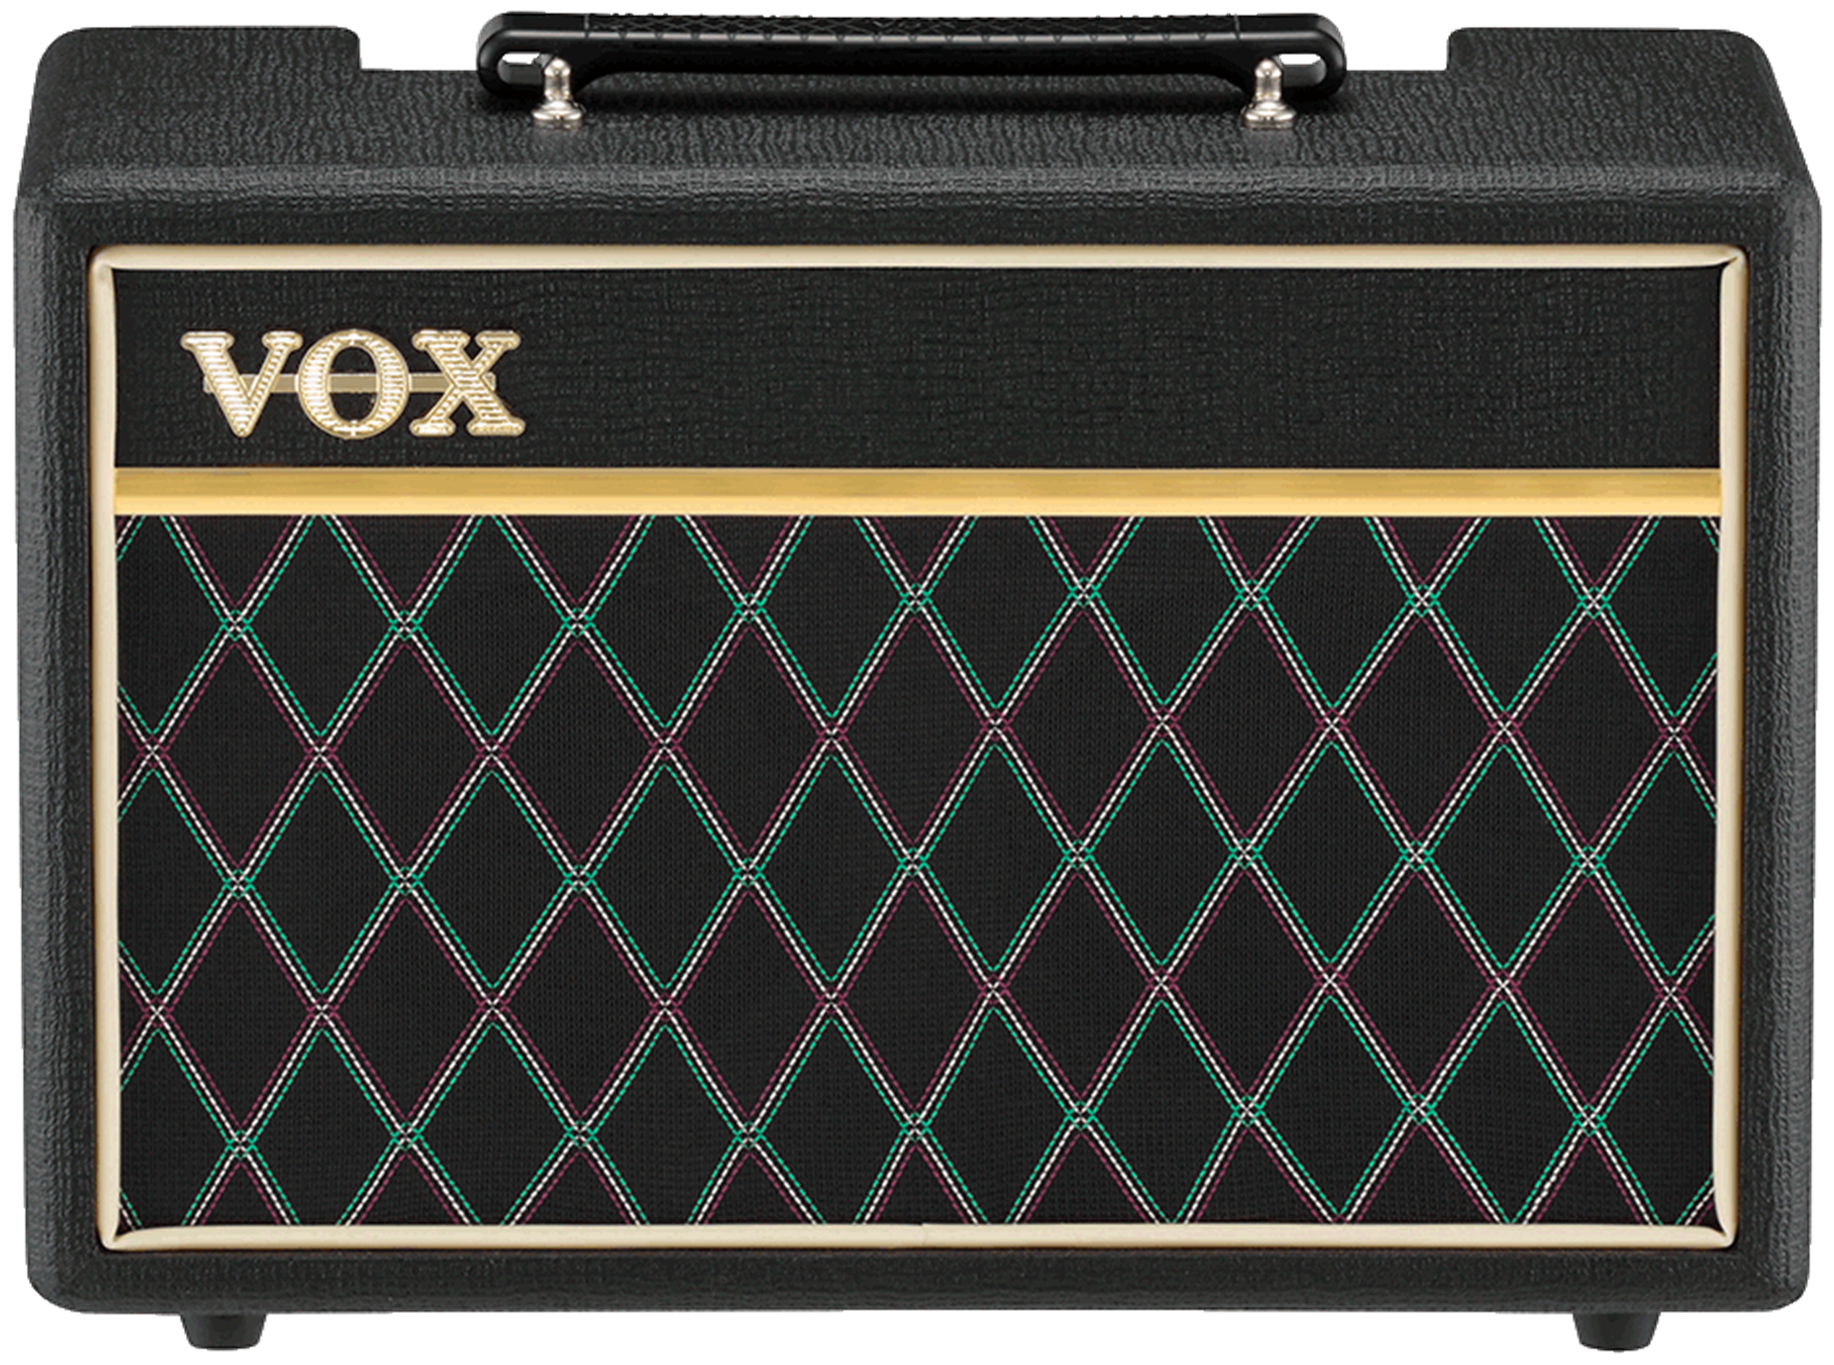 VOX PB10  Pathfinder-10  Bass   Portable Bass Guitar Amp 